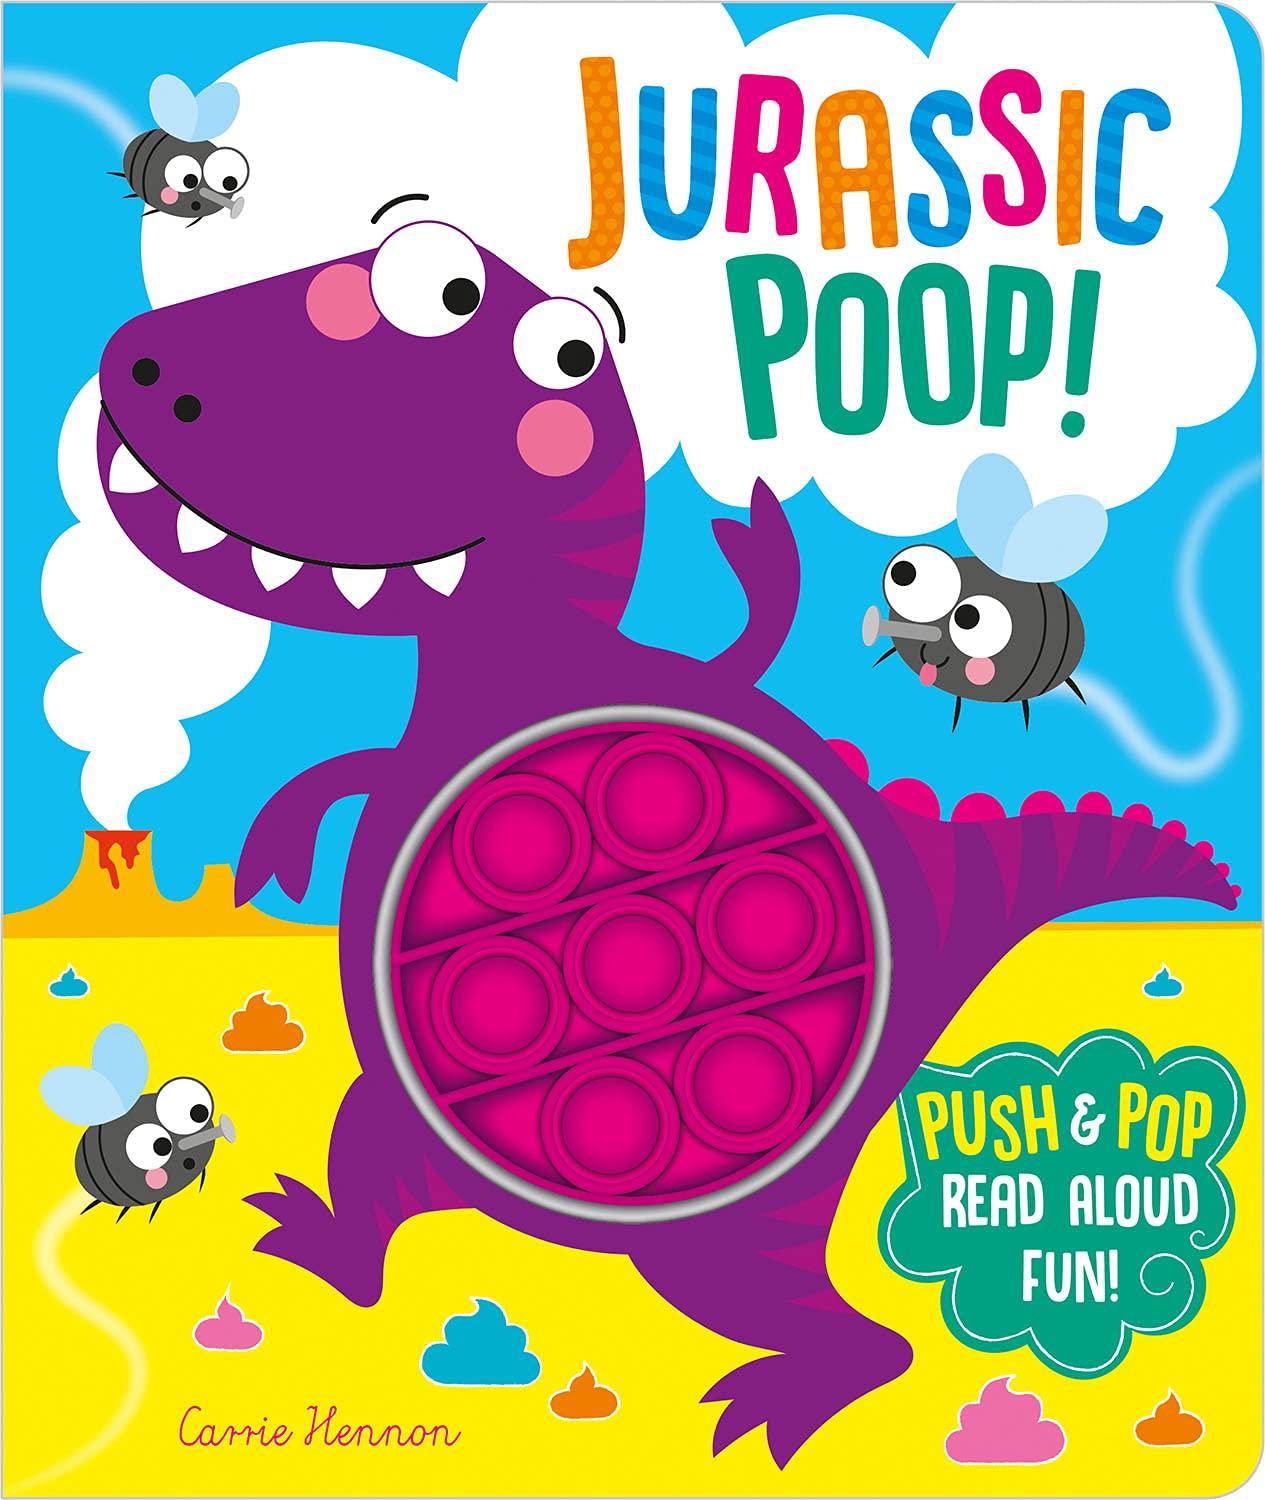 Jurassic Poop! (Push Pop Bubble Books)